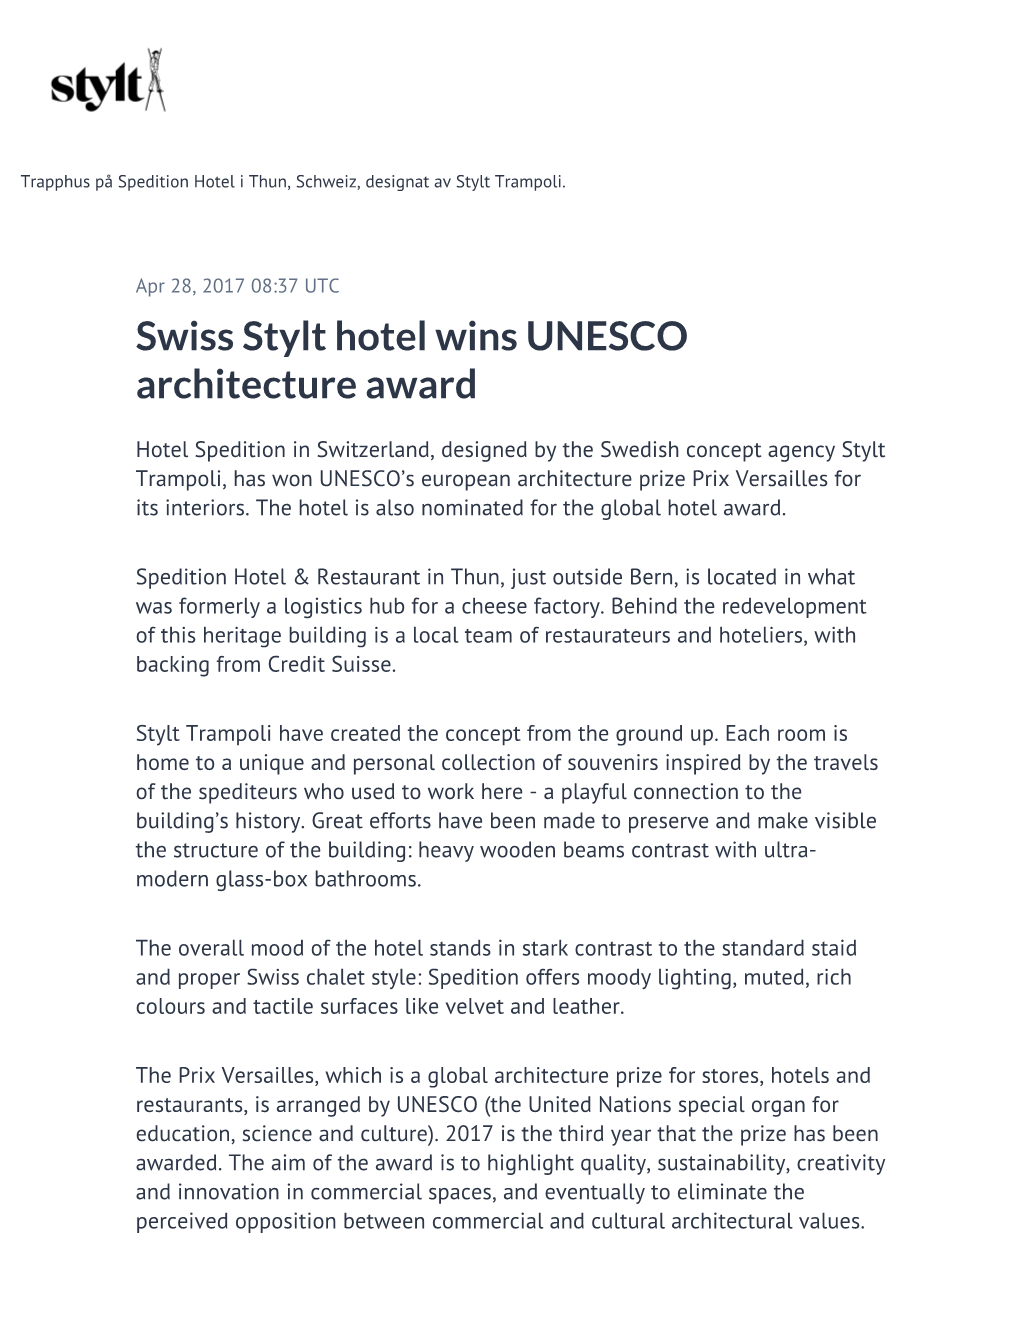 Swiss Stylt Hotel Wins UNESCO Architecture Award